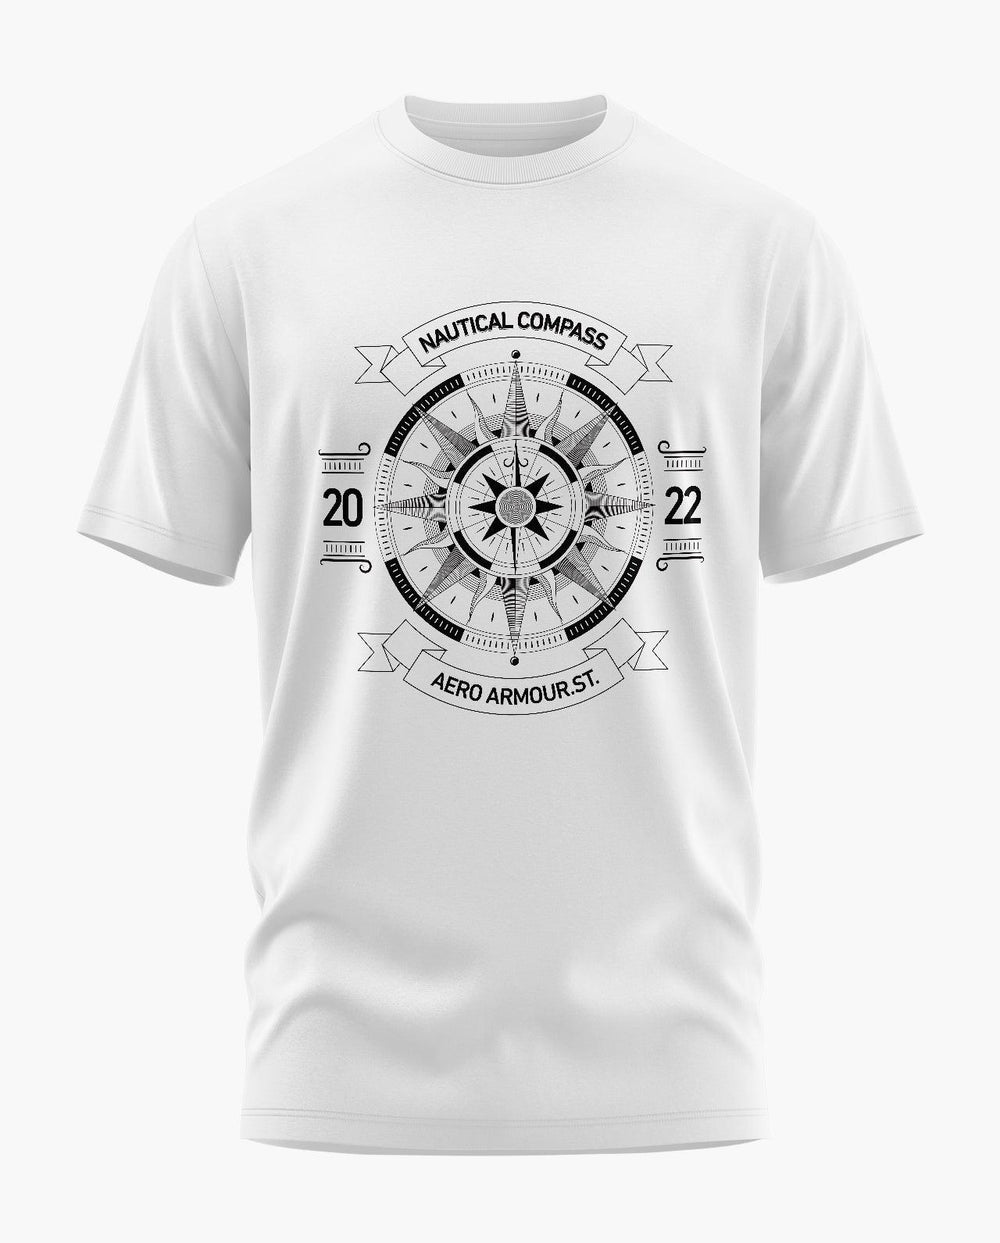 Mariners Nautical Compass T-Shirt - Aero Armour